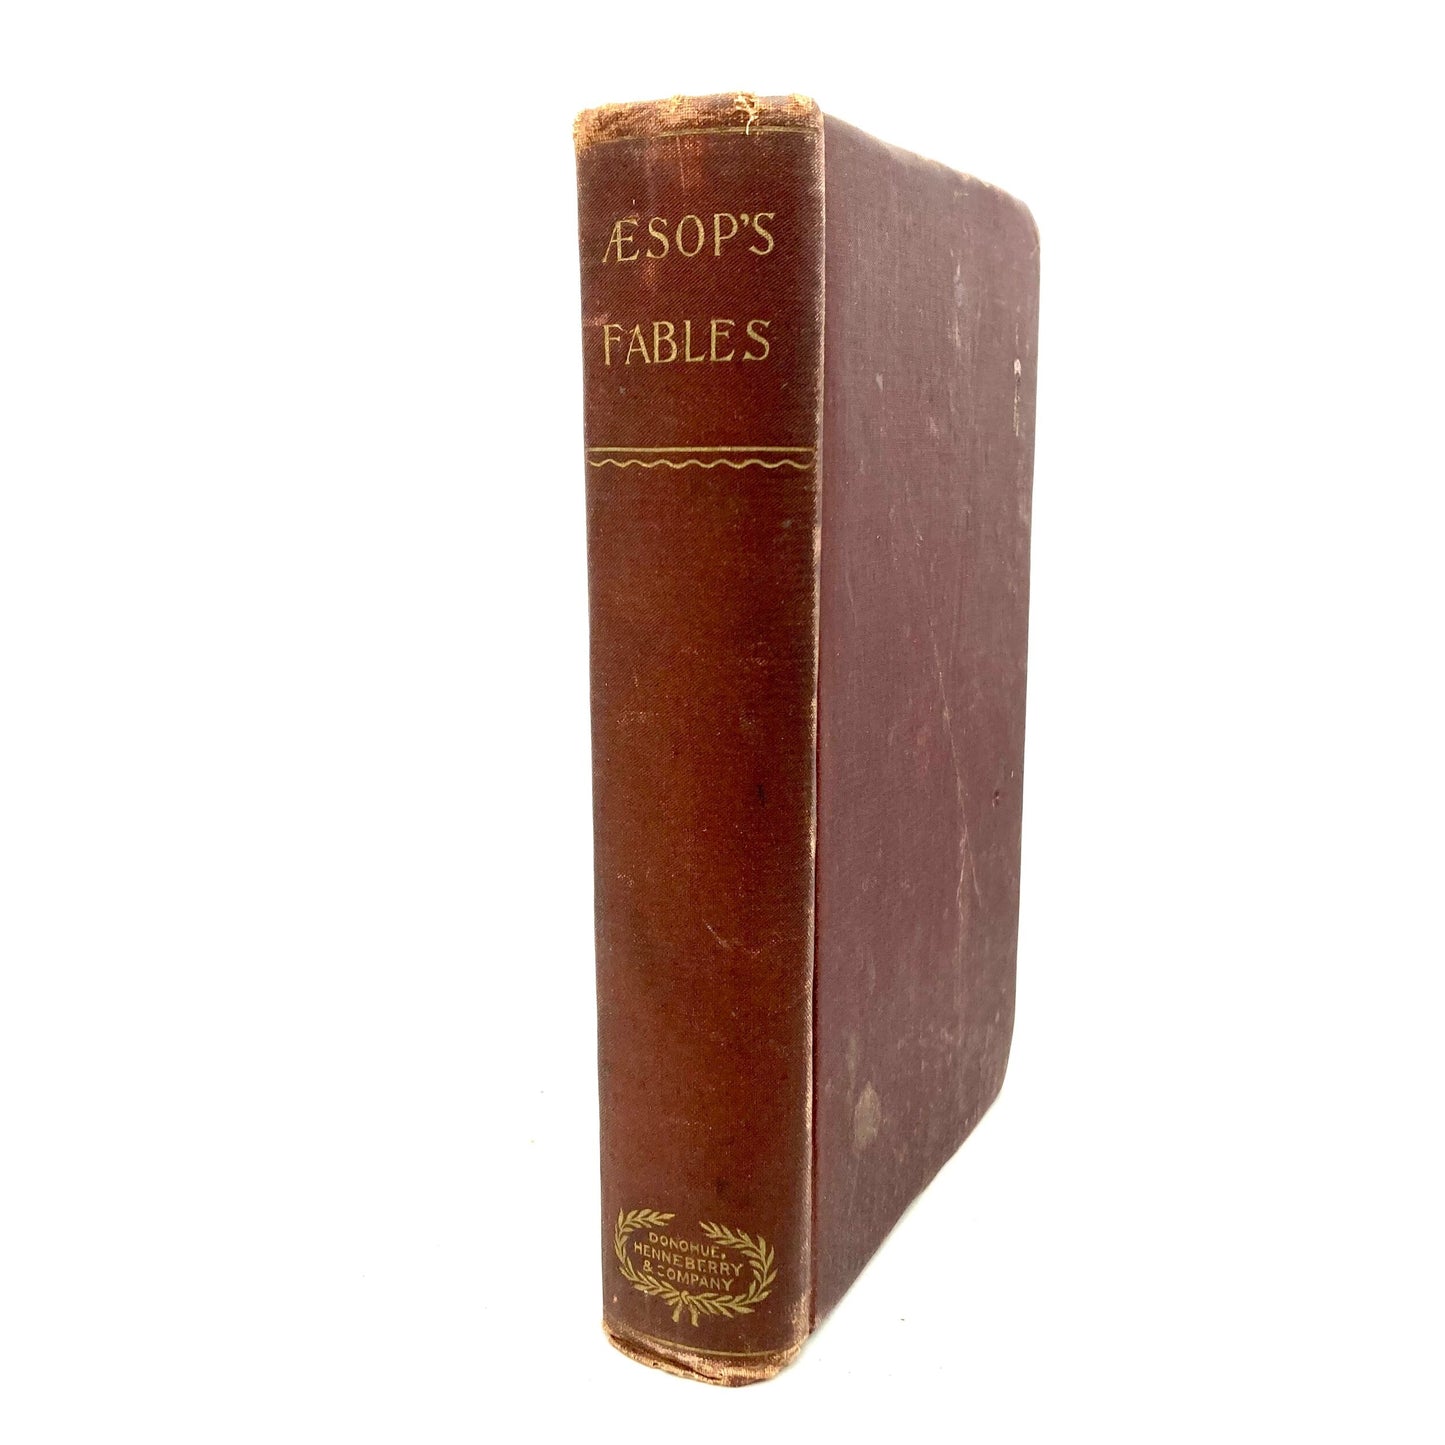 AESOP "Aesop's Fables" [Donohue, Henneberry, & Co, c1890] - Buzz Bookstore